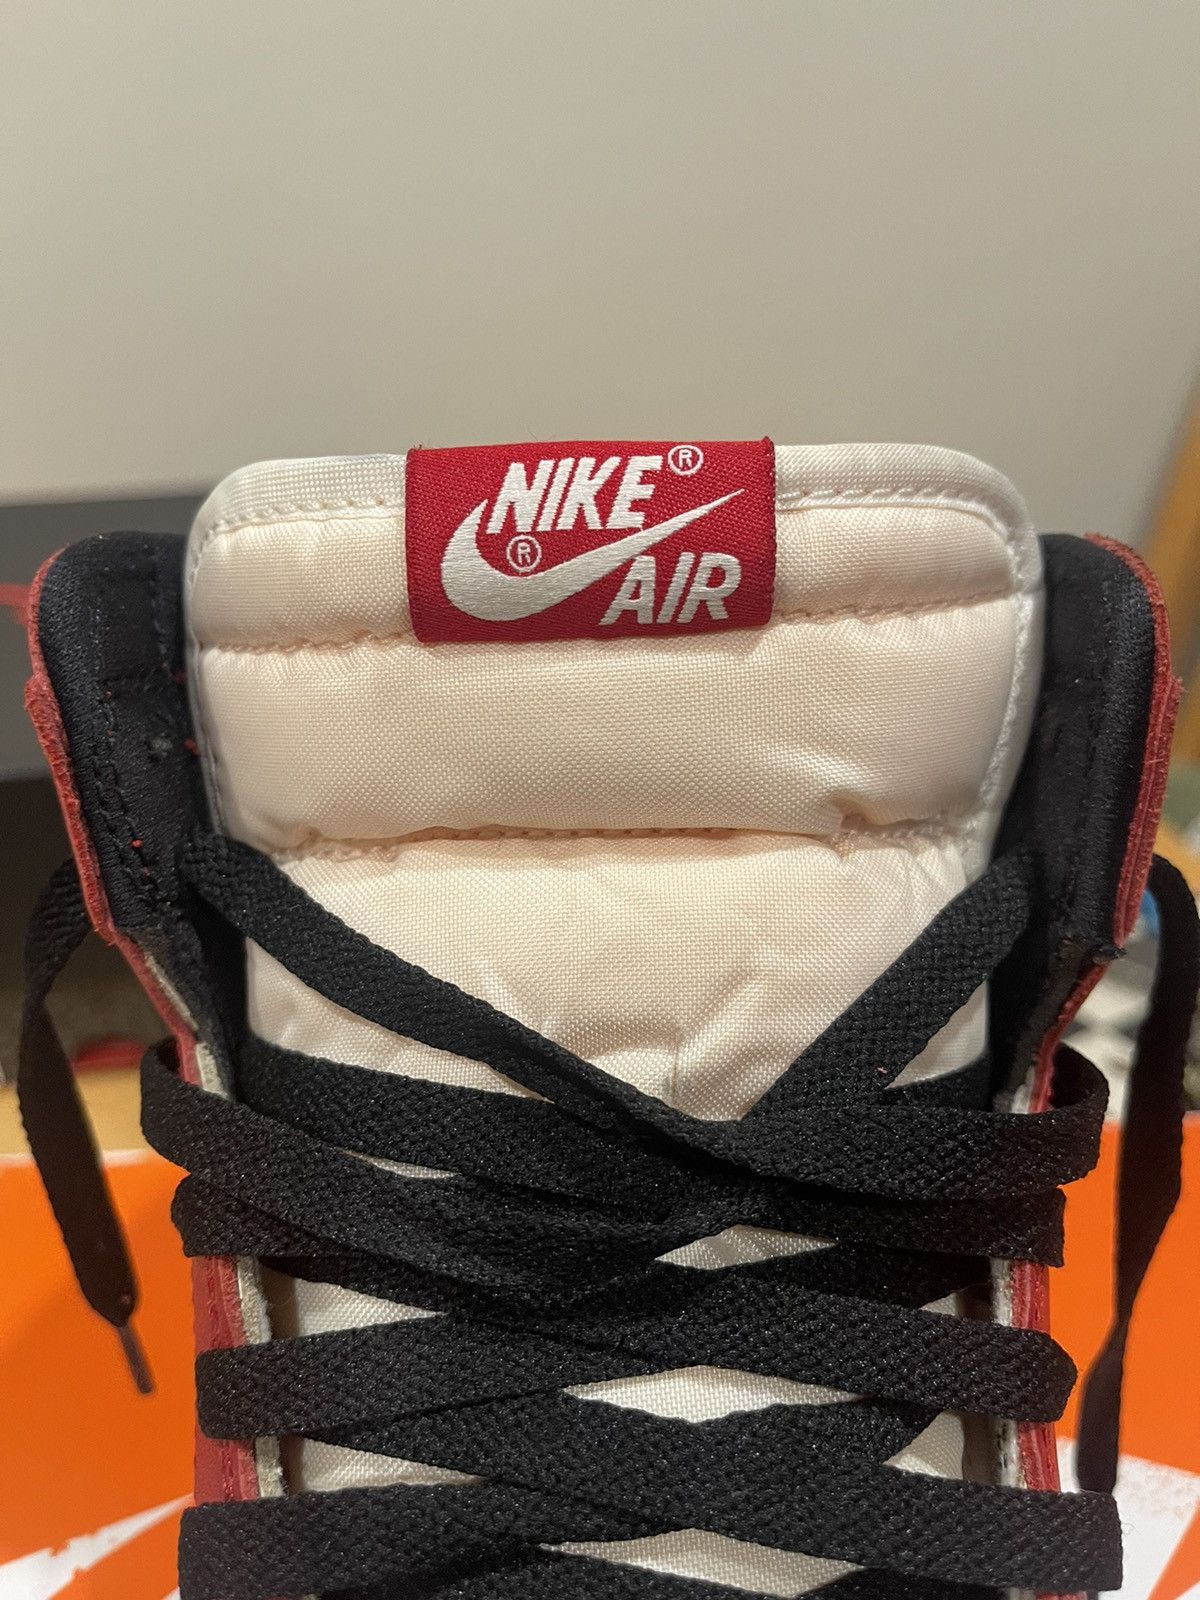 Nike Air Jordan 1 - Chicago “Lost & Found” Size US 10.5 / EU 43-44 - 12 Thumbnail